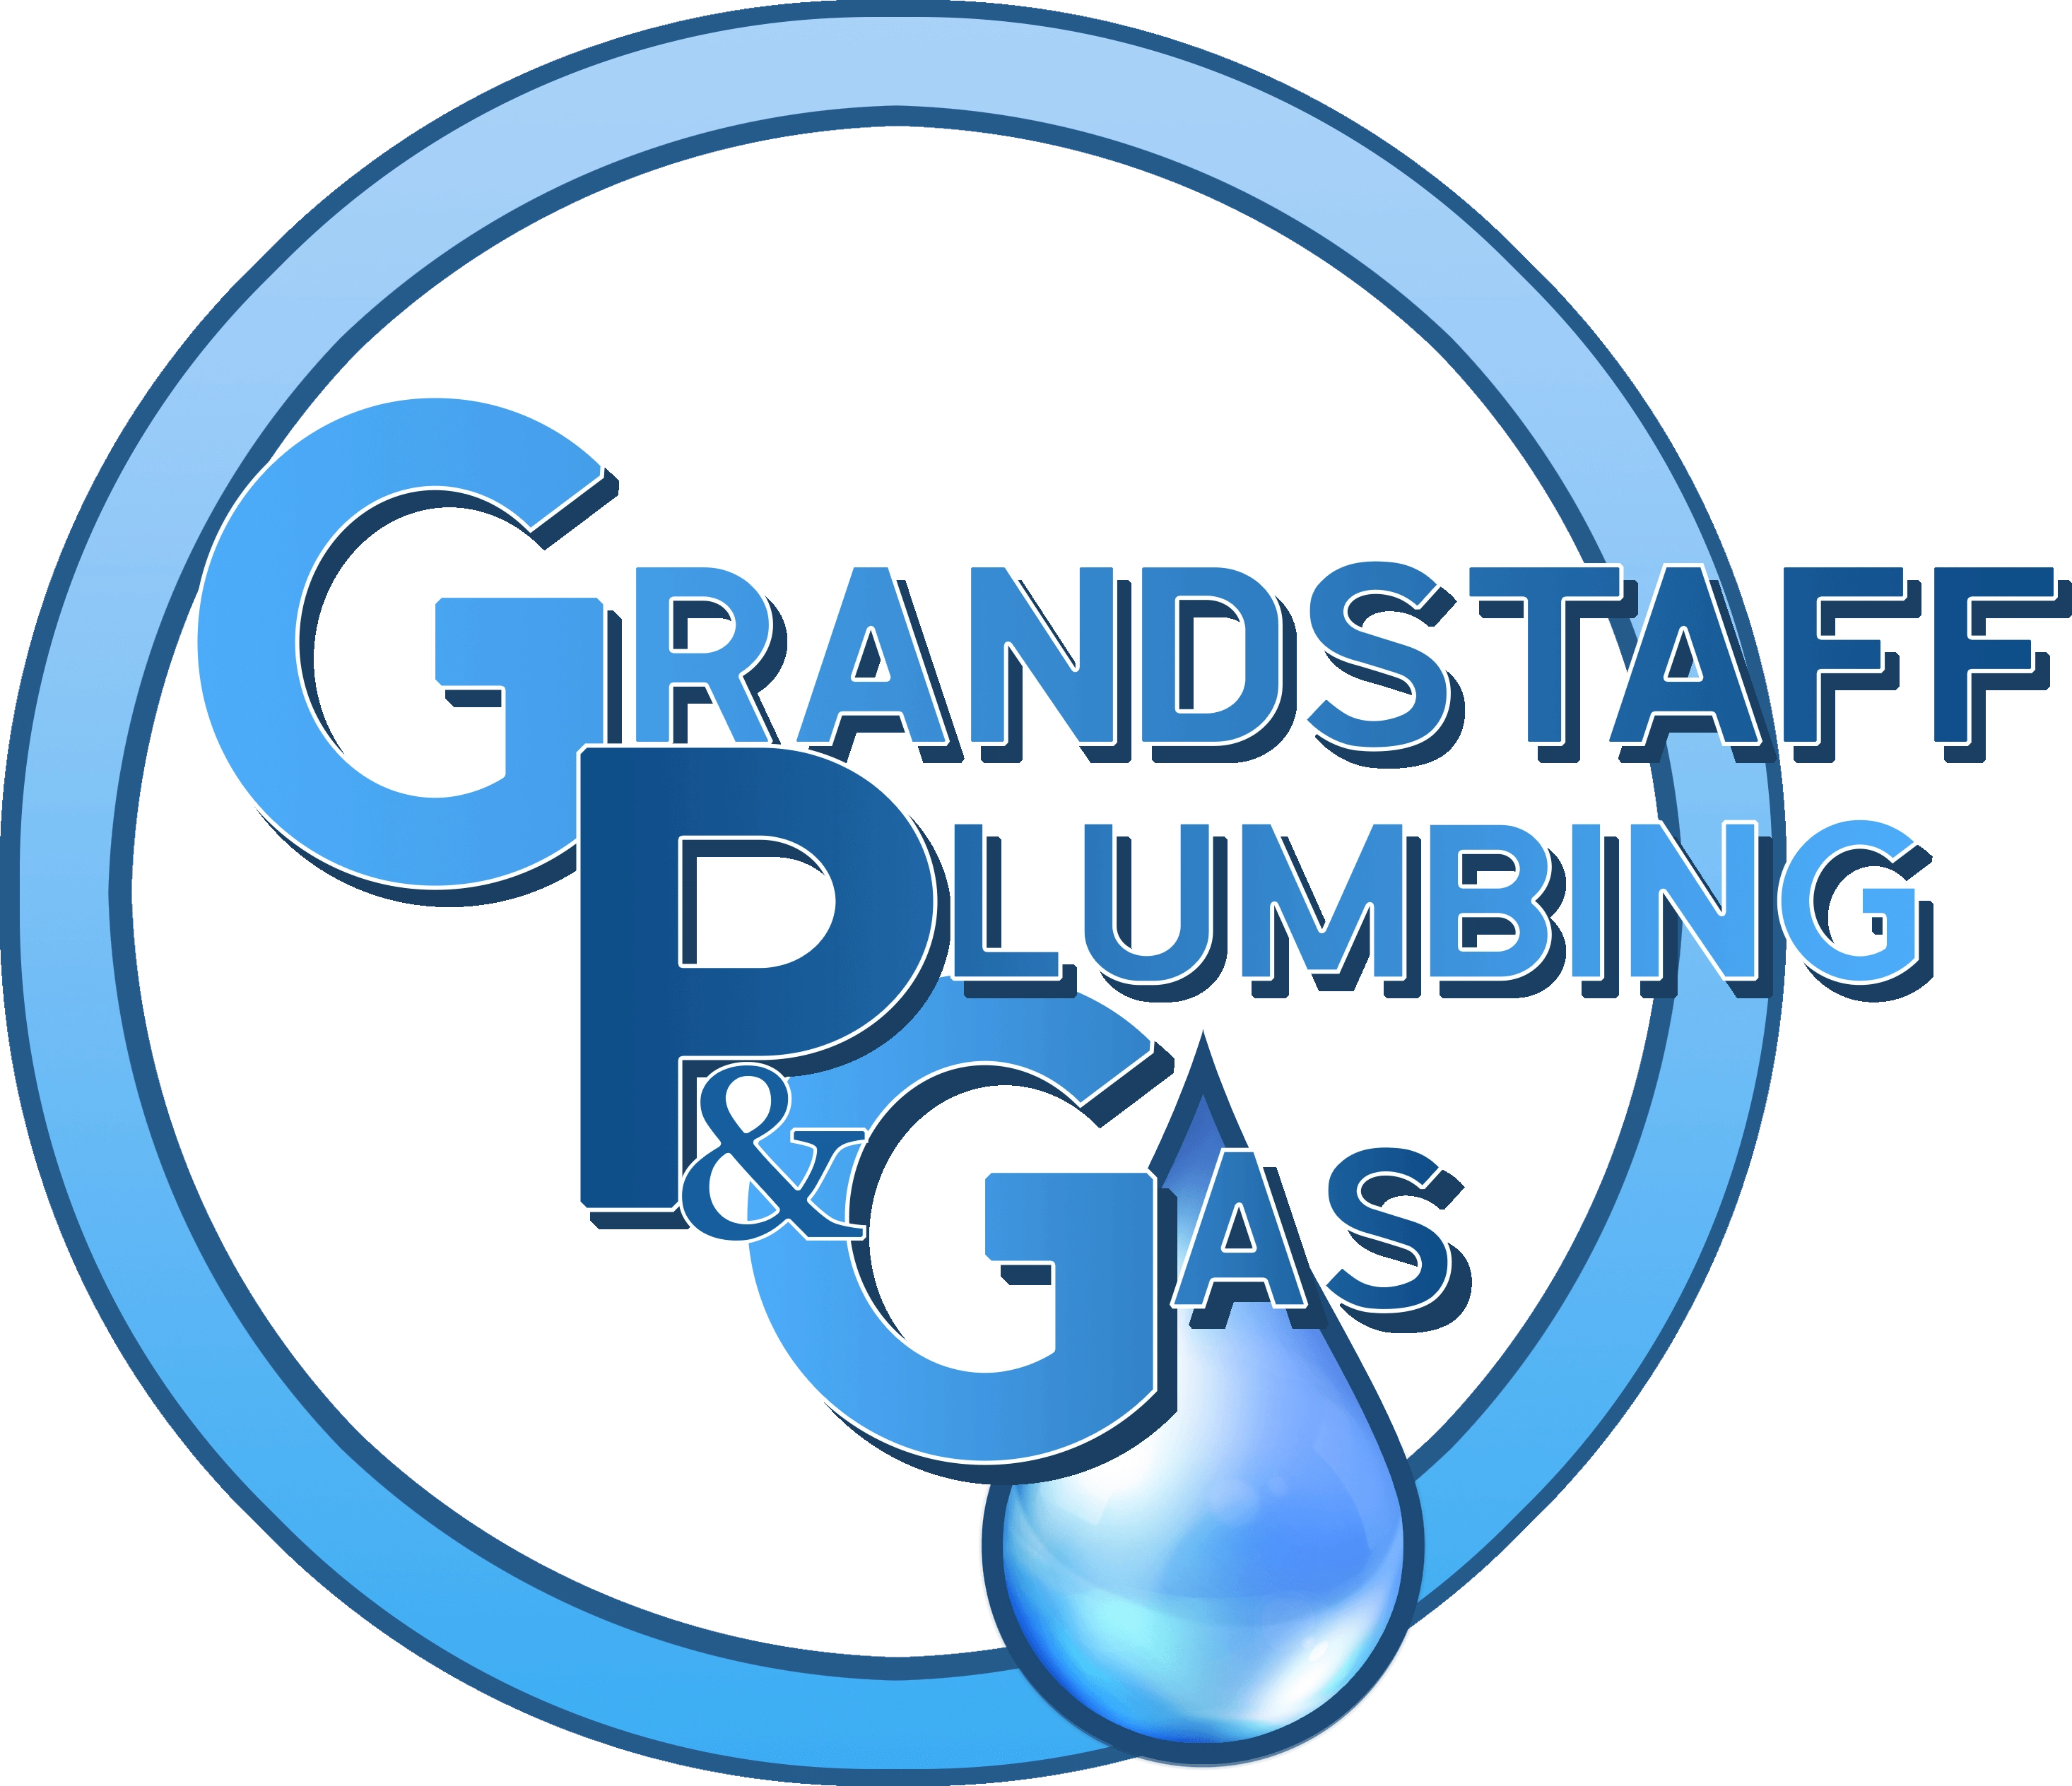 Grandstaff Plumbing & Gas Logo